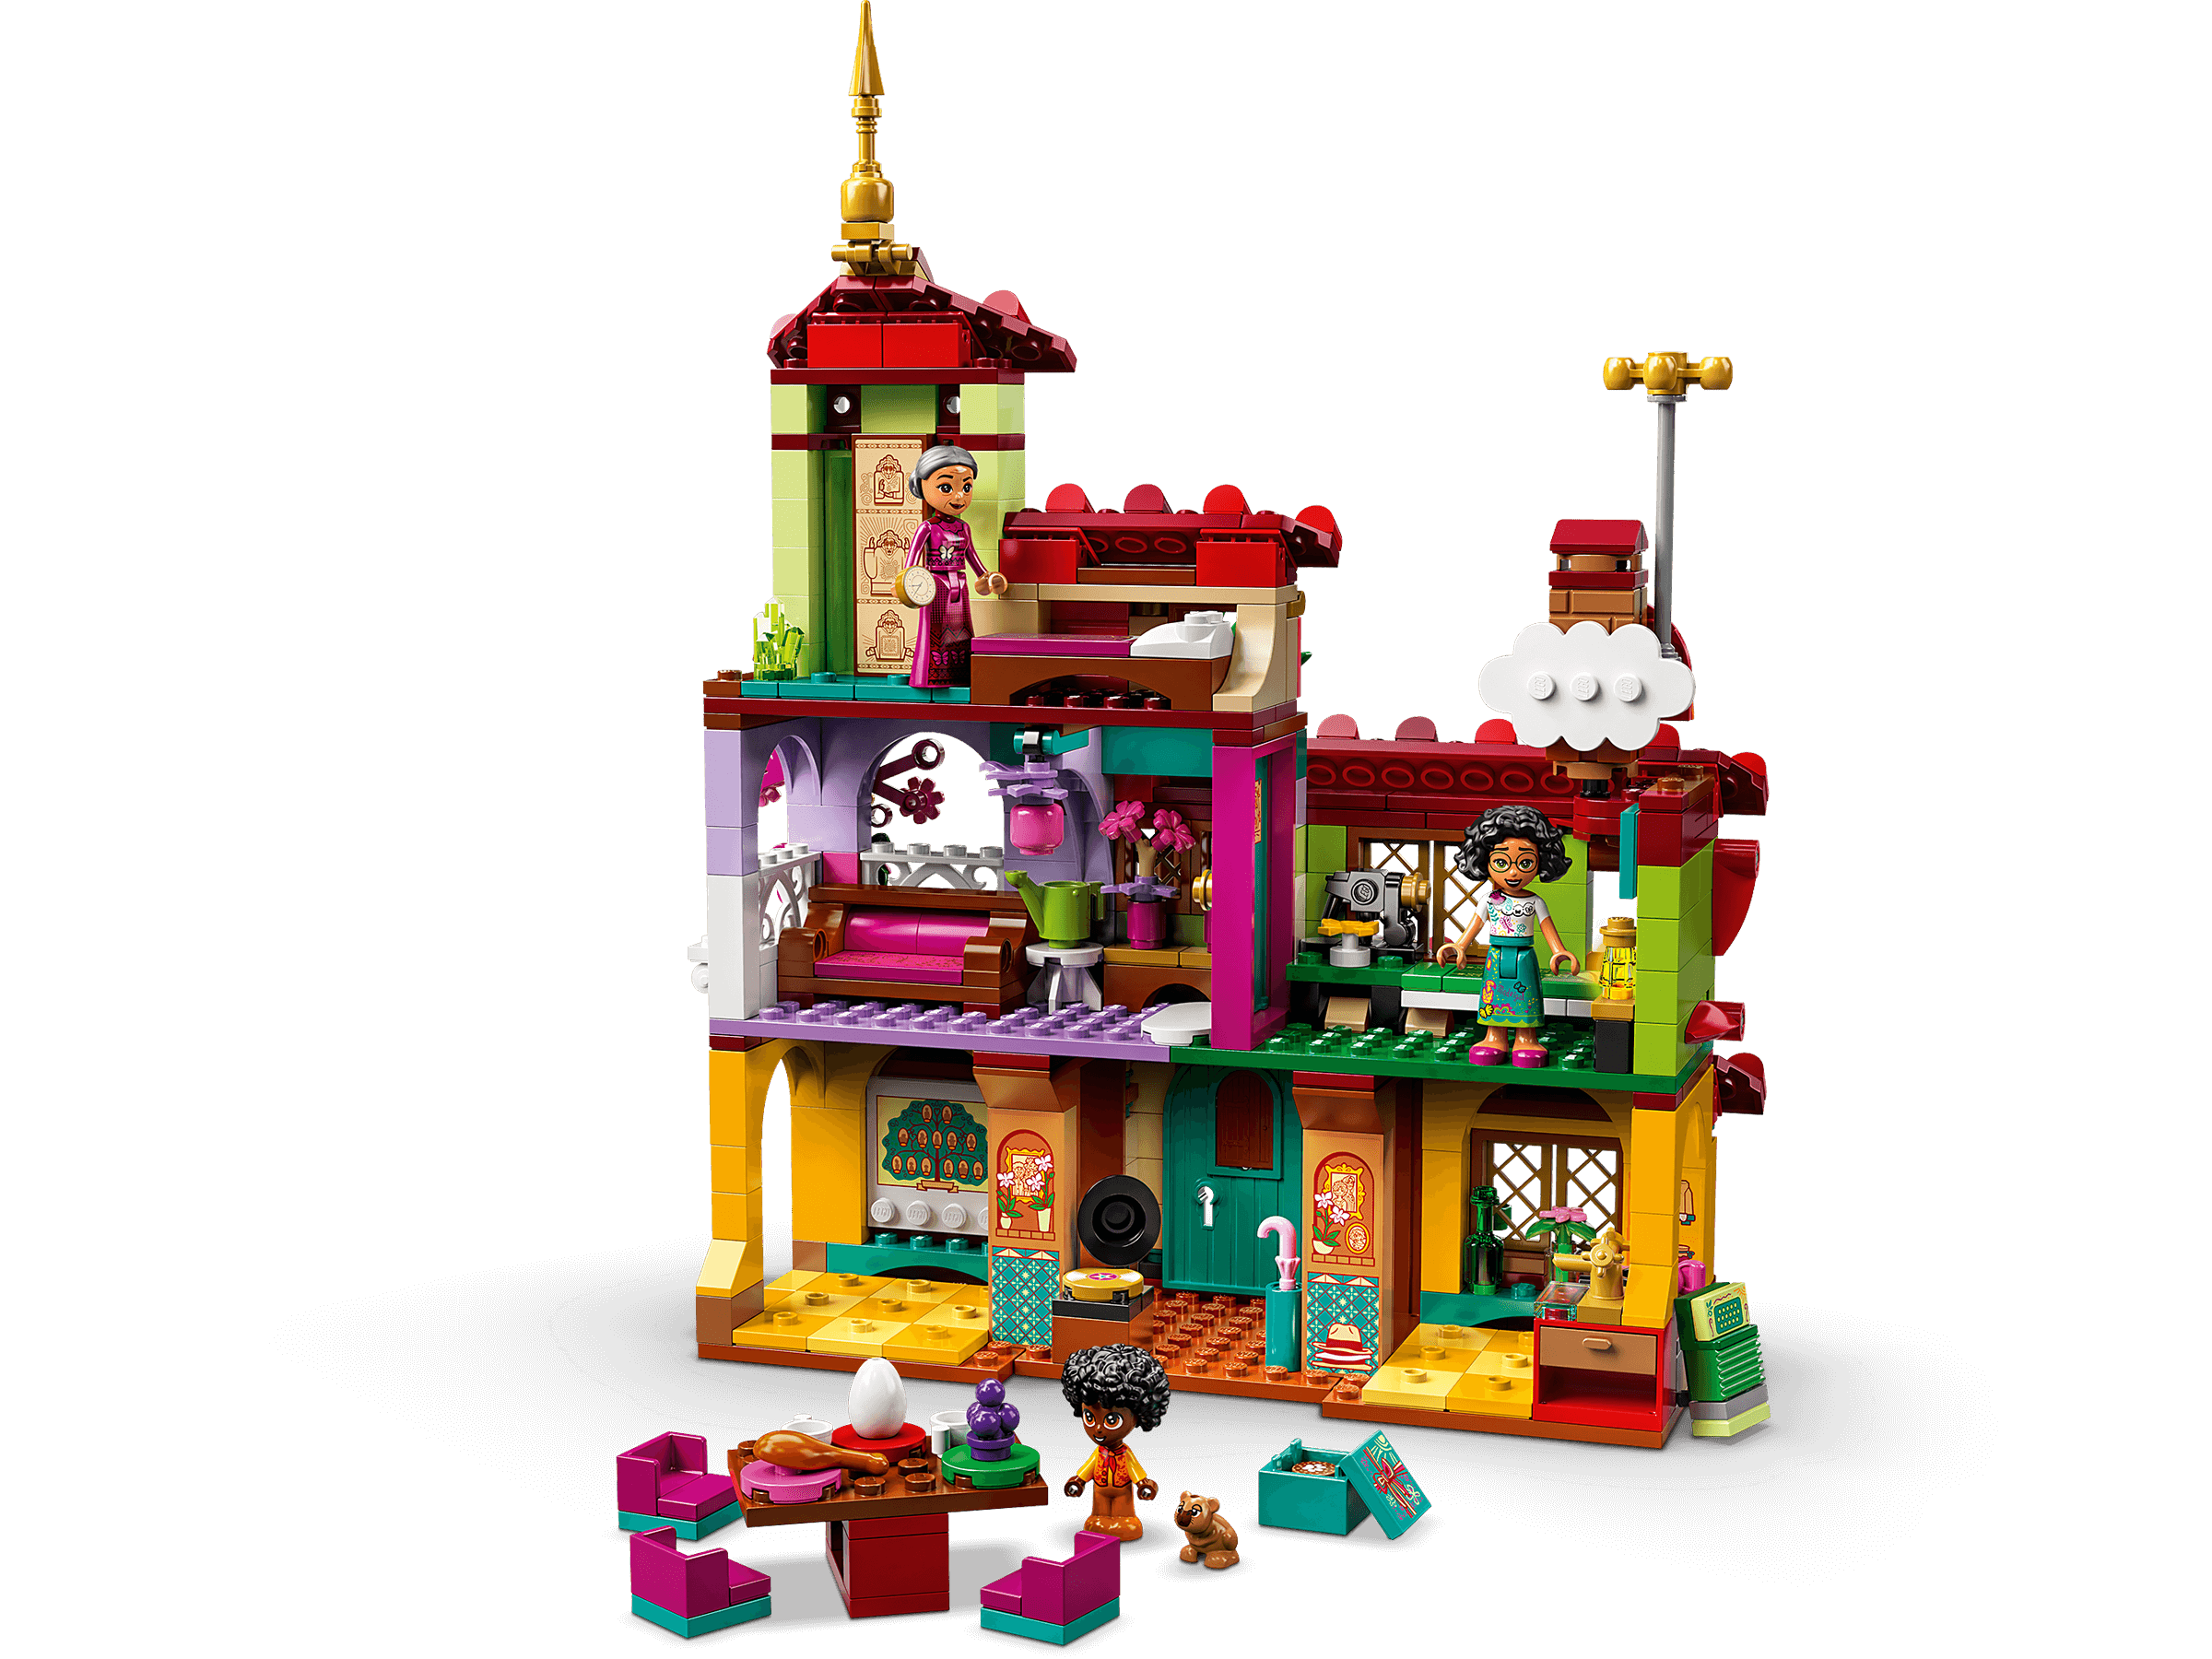 LEGO Disney Princess Encanto The Madrigal House 43202 (Retiring Soon) by  LEGO Systems Inc.